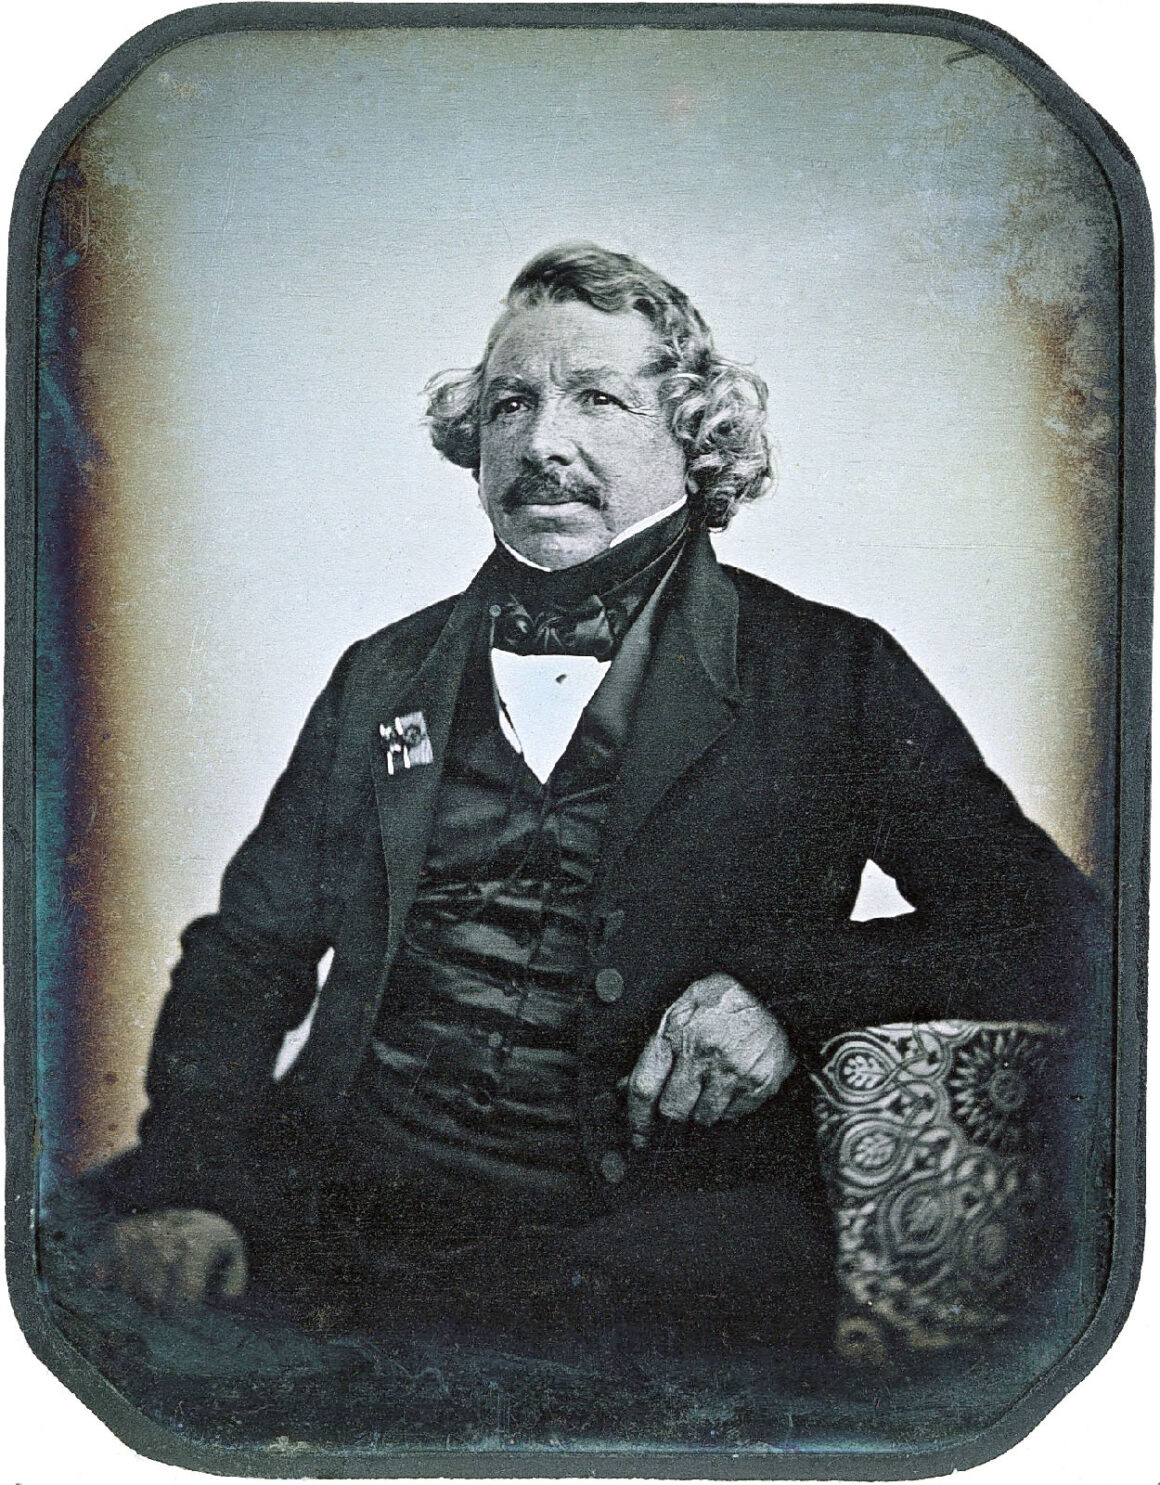 a daguerreotype of Louis Daguerre